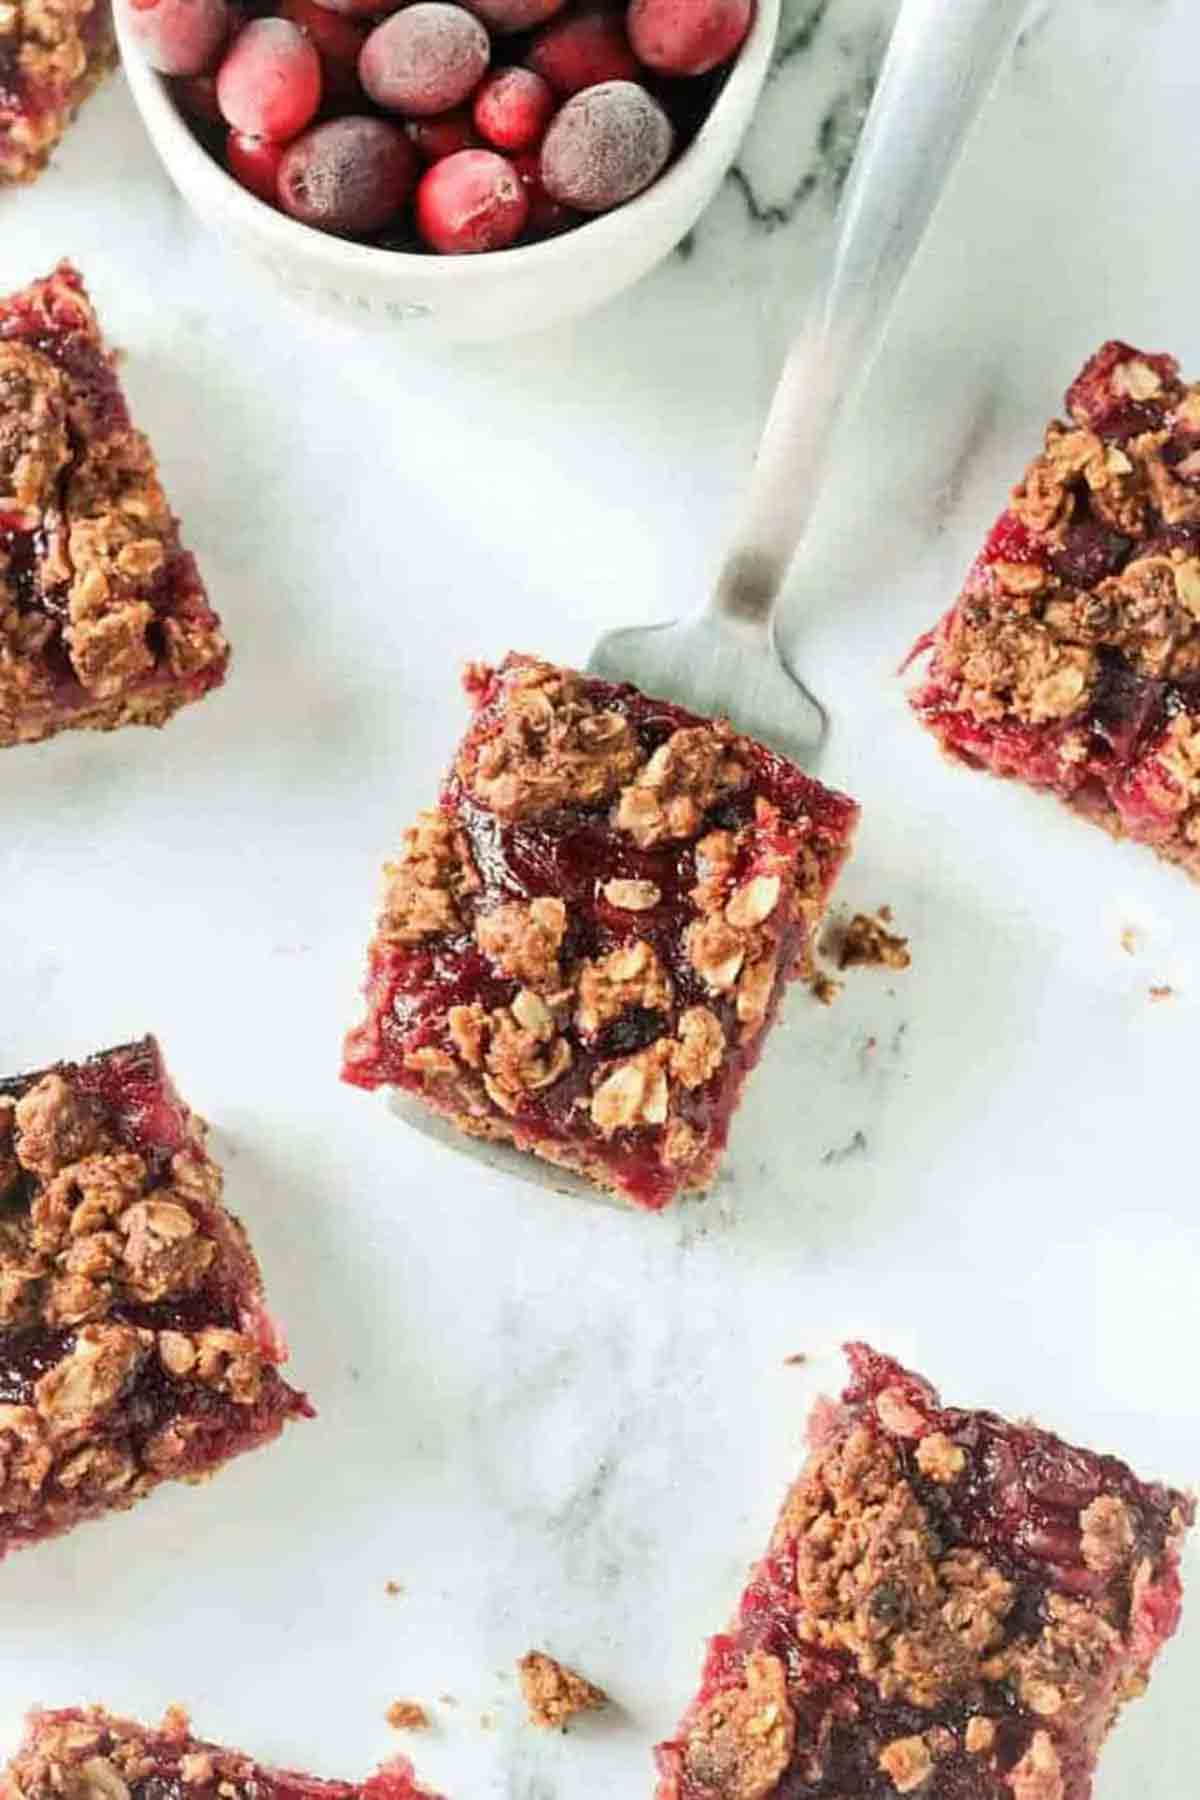 Cranberry Vegan Crumble Dessert Bars With Oats